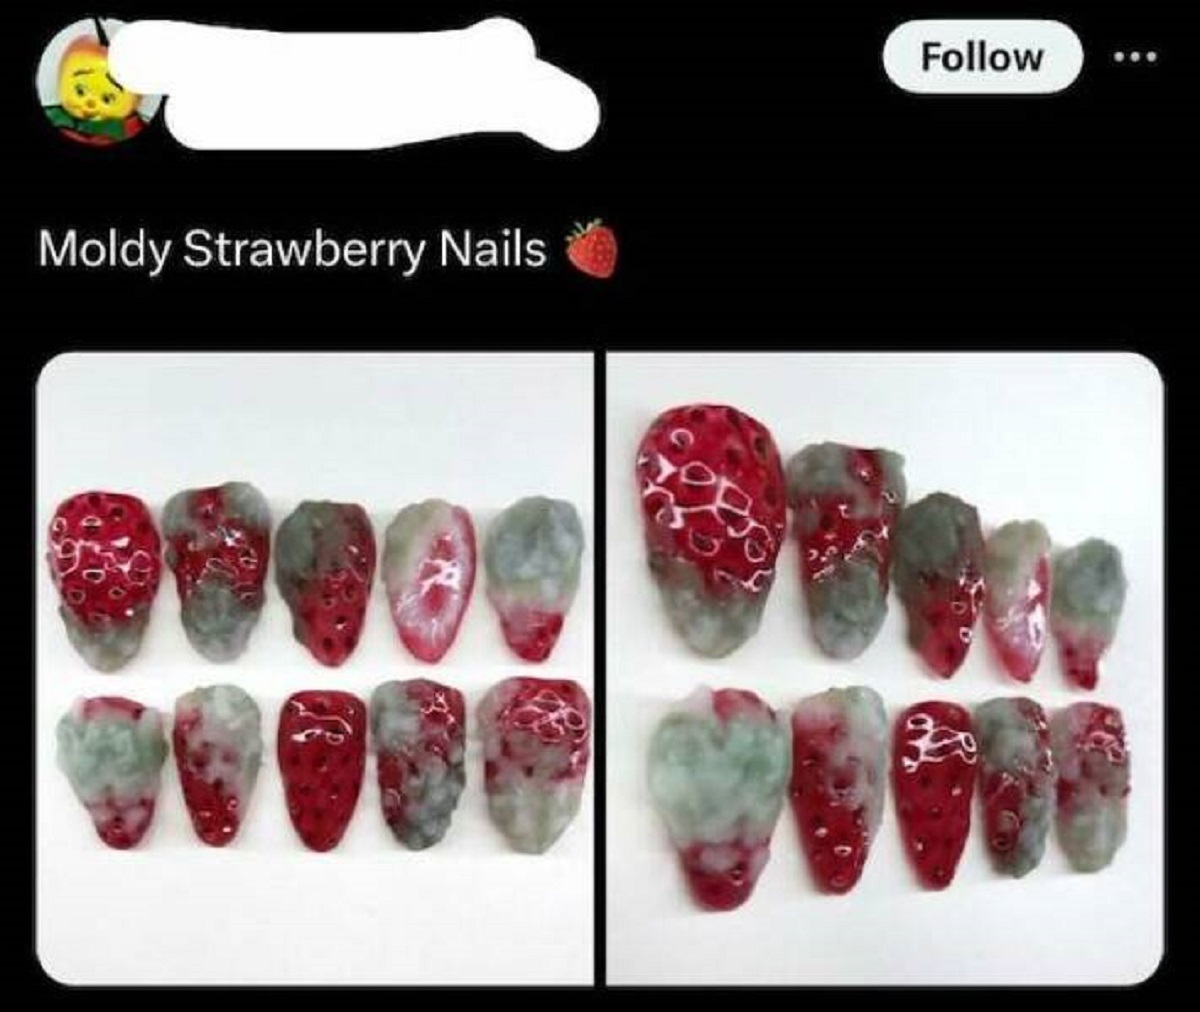 gemstone - Moldy Strawberry Nails 4444 00000